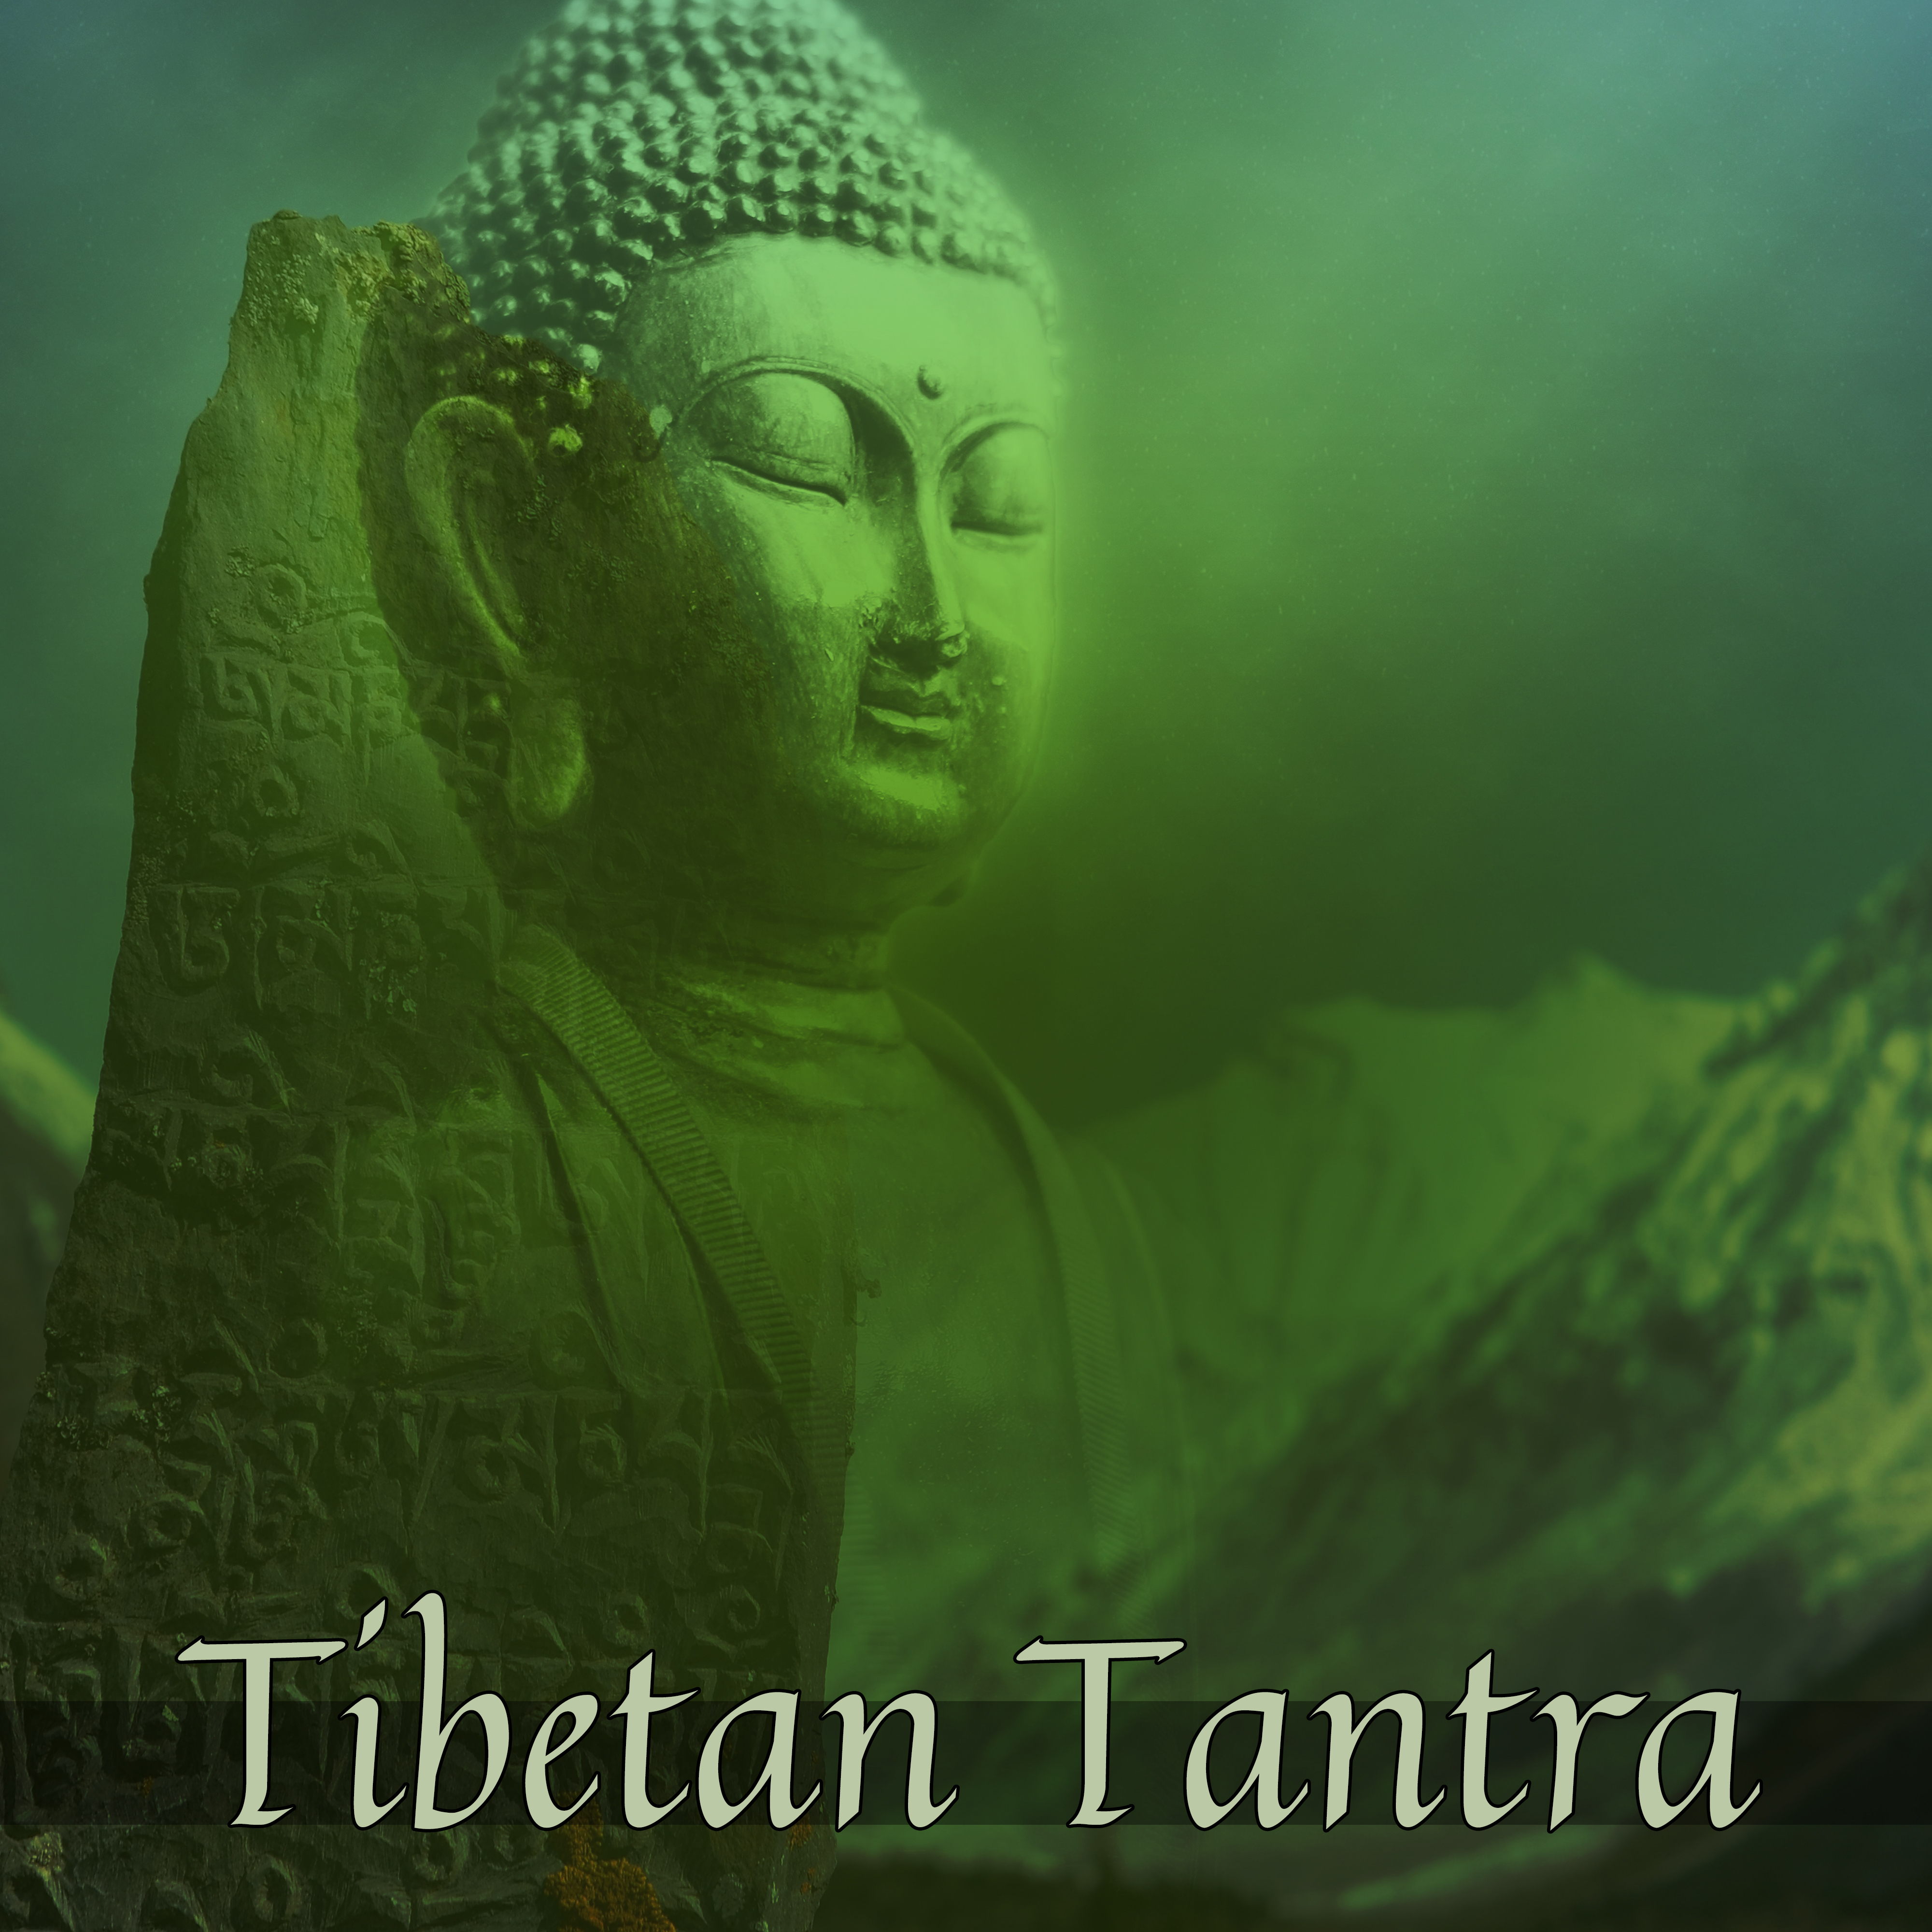 Tibetan Tantra  Spiritual Sounds of Nature, Tantra Music, Sexy Power, Meditation Songs, Healing Yoga, Relax, Yoga Music